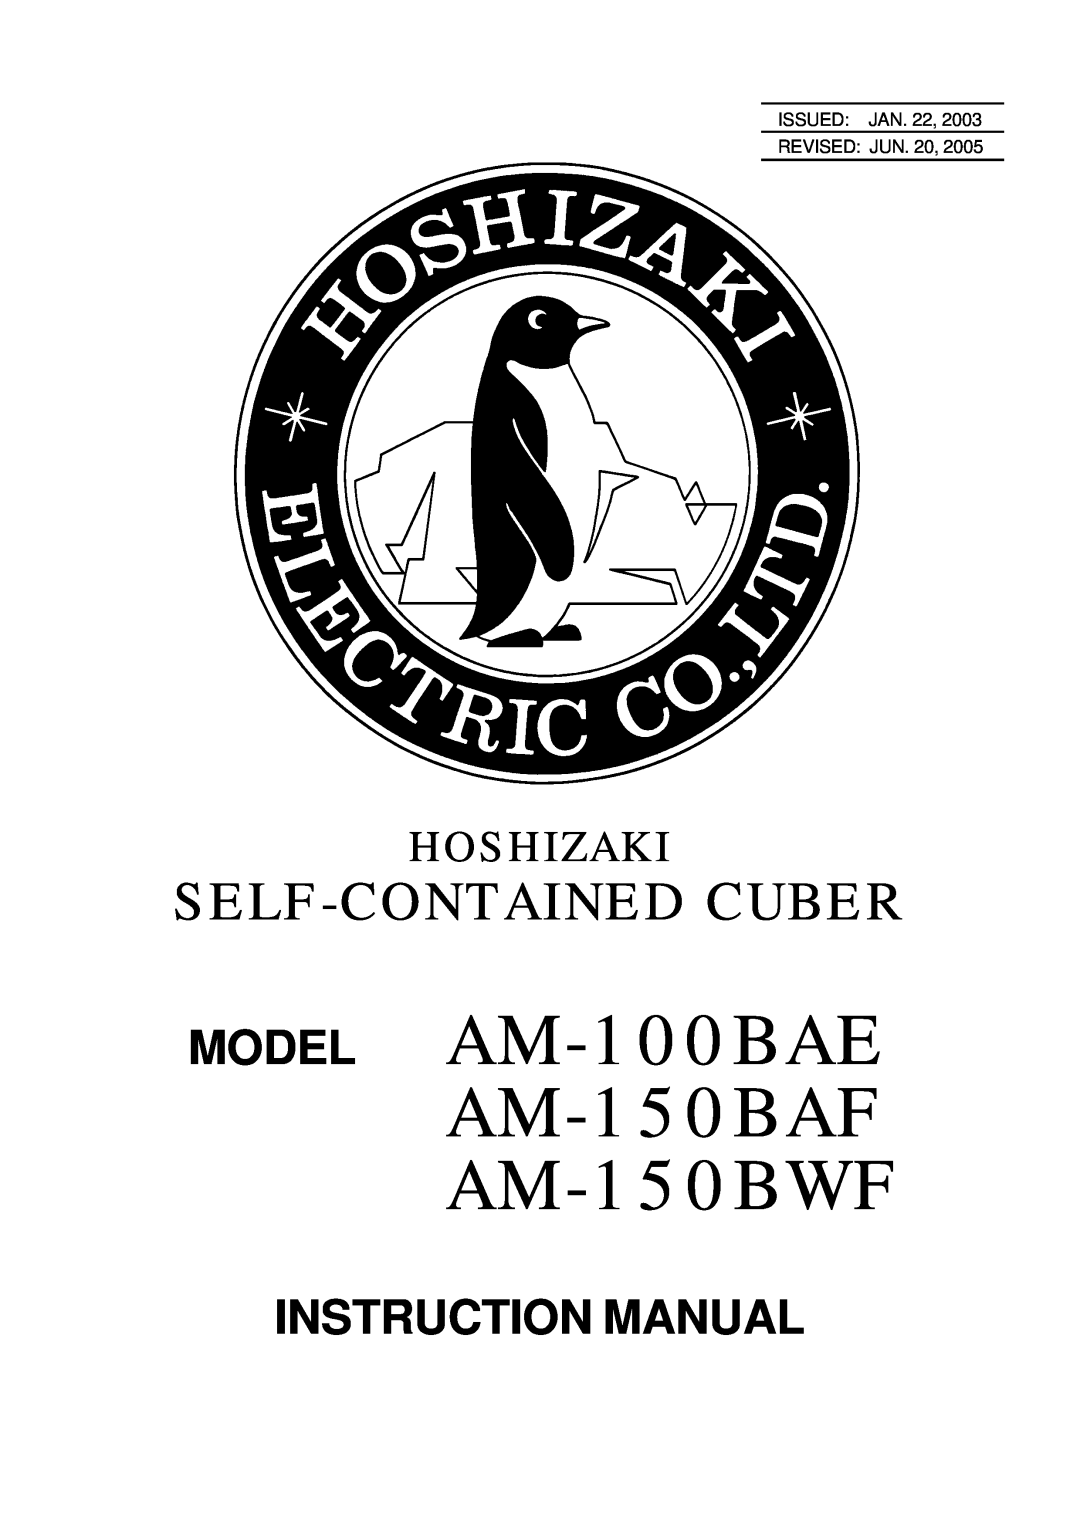 Hoshizaki instruction manual MODEL AM-100BAE AM-150BAF AM-150BWF, Self-Contained Cuber, Hoshizaki 